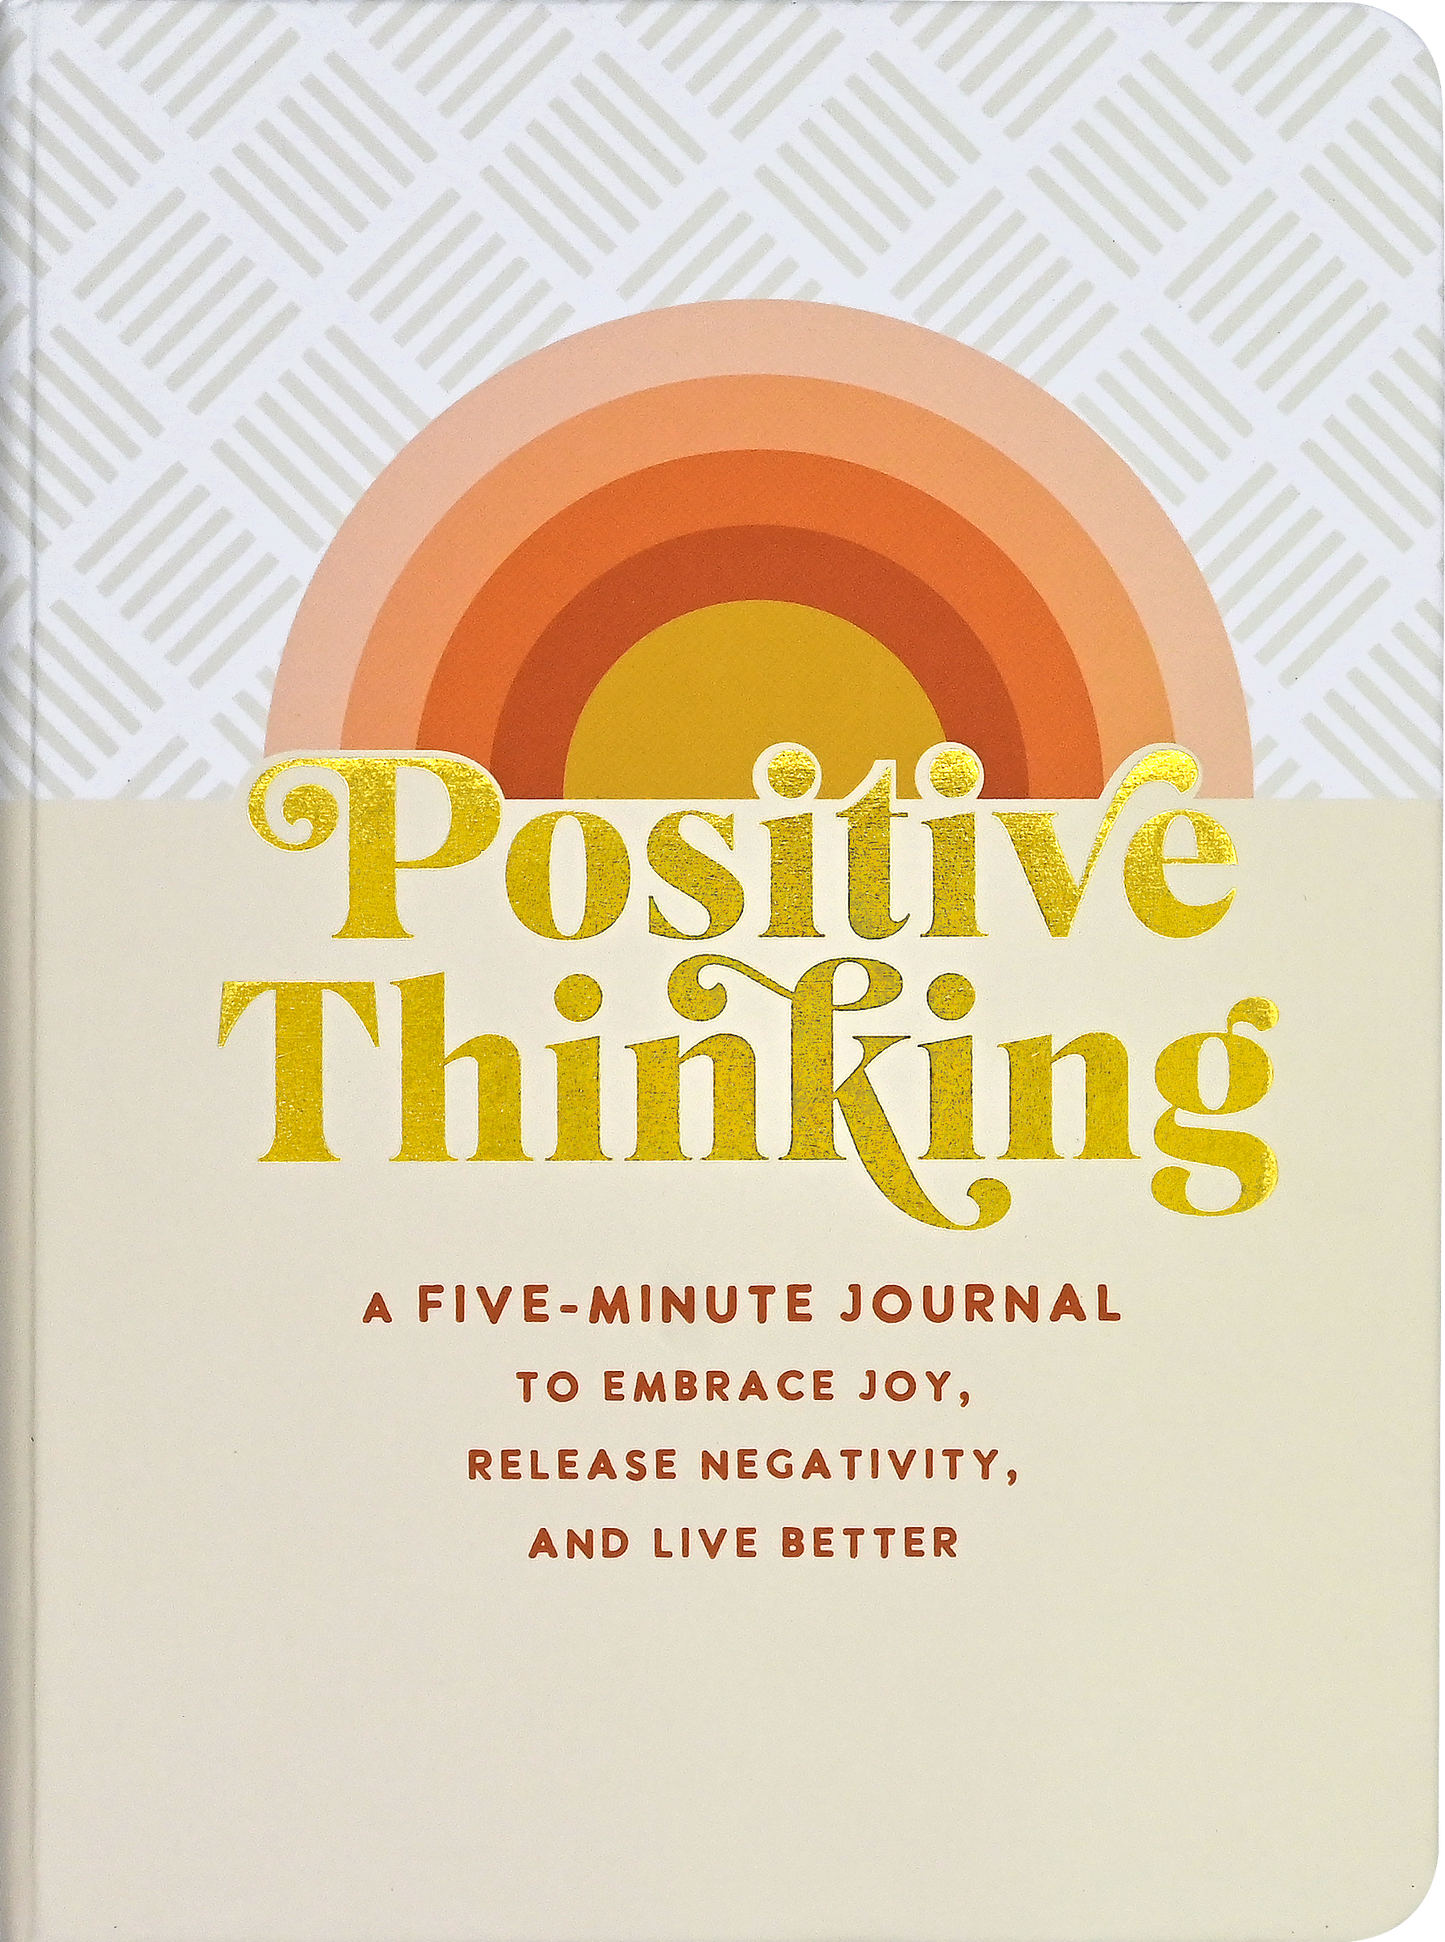 Peter Pauper Press - Positive Thinking